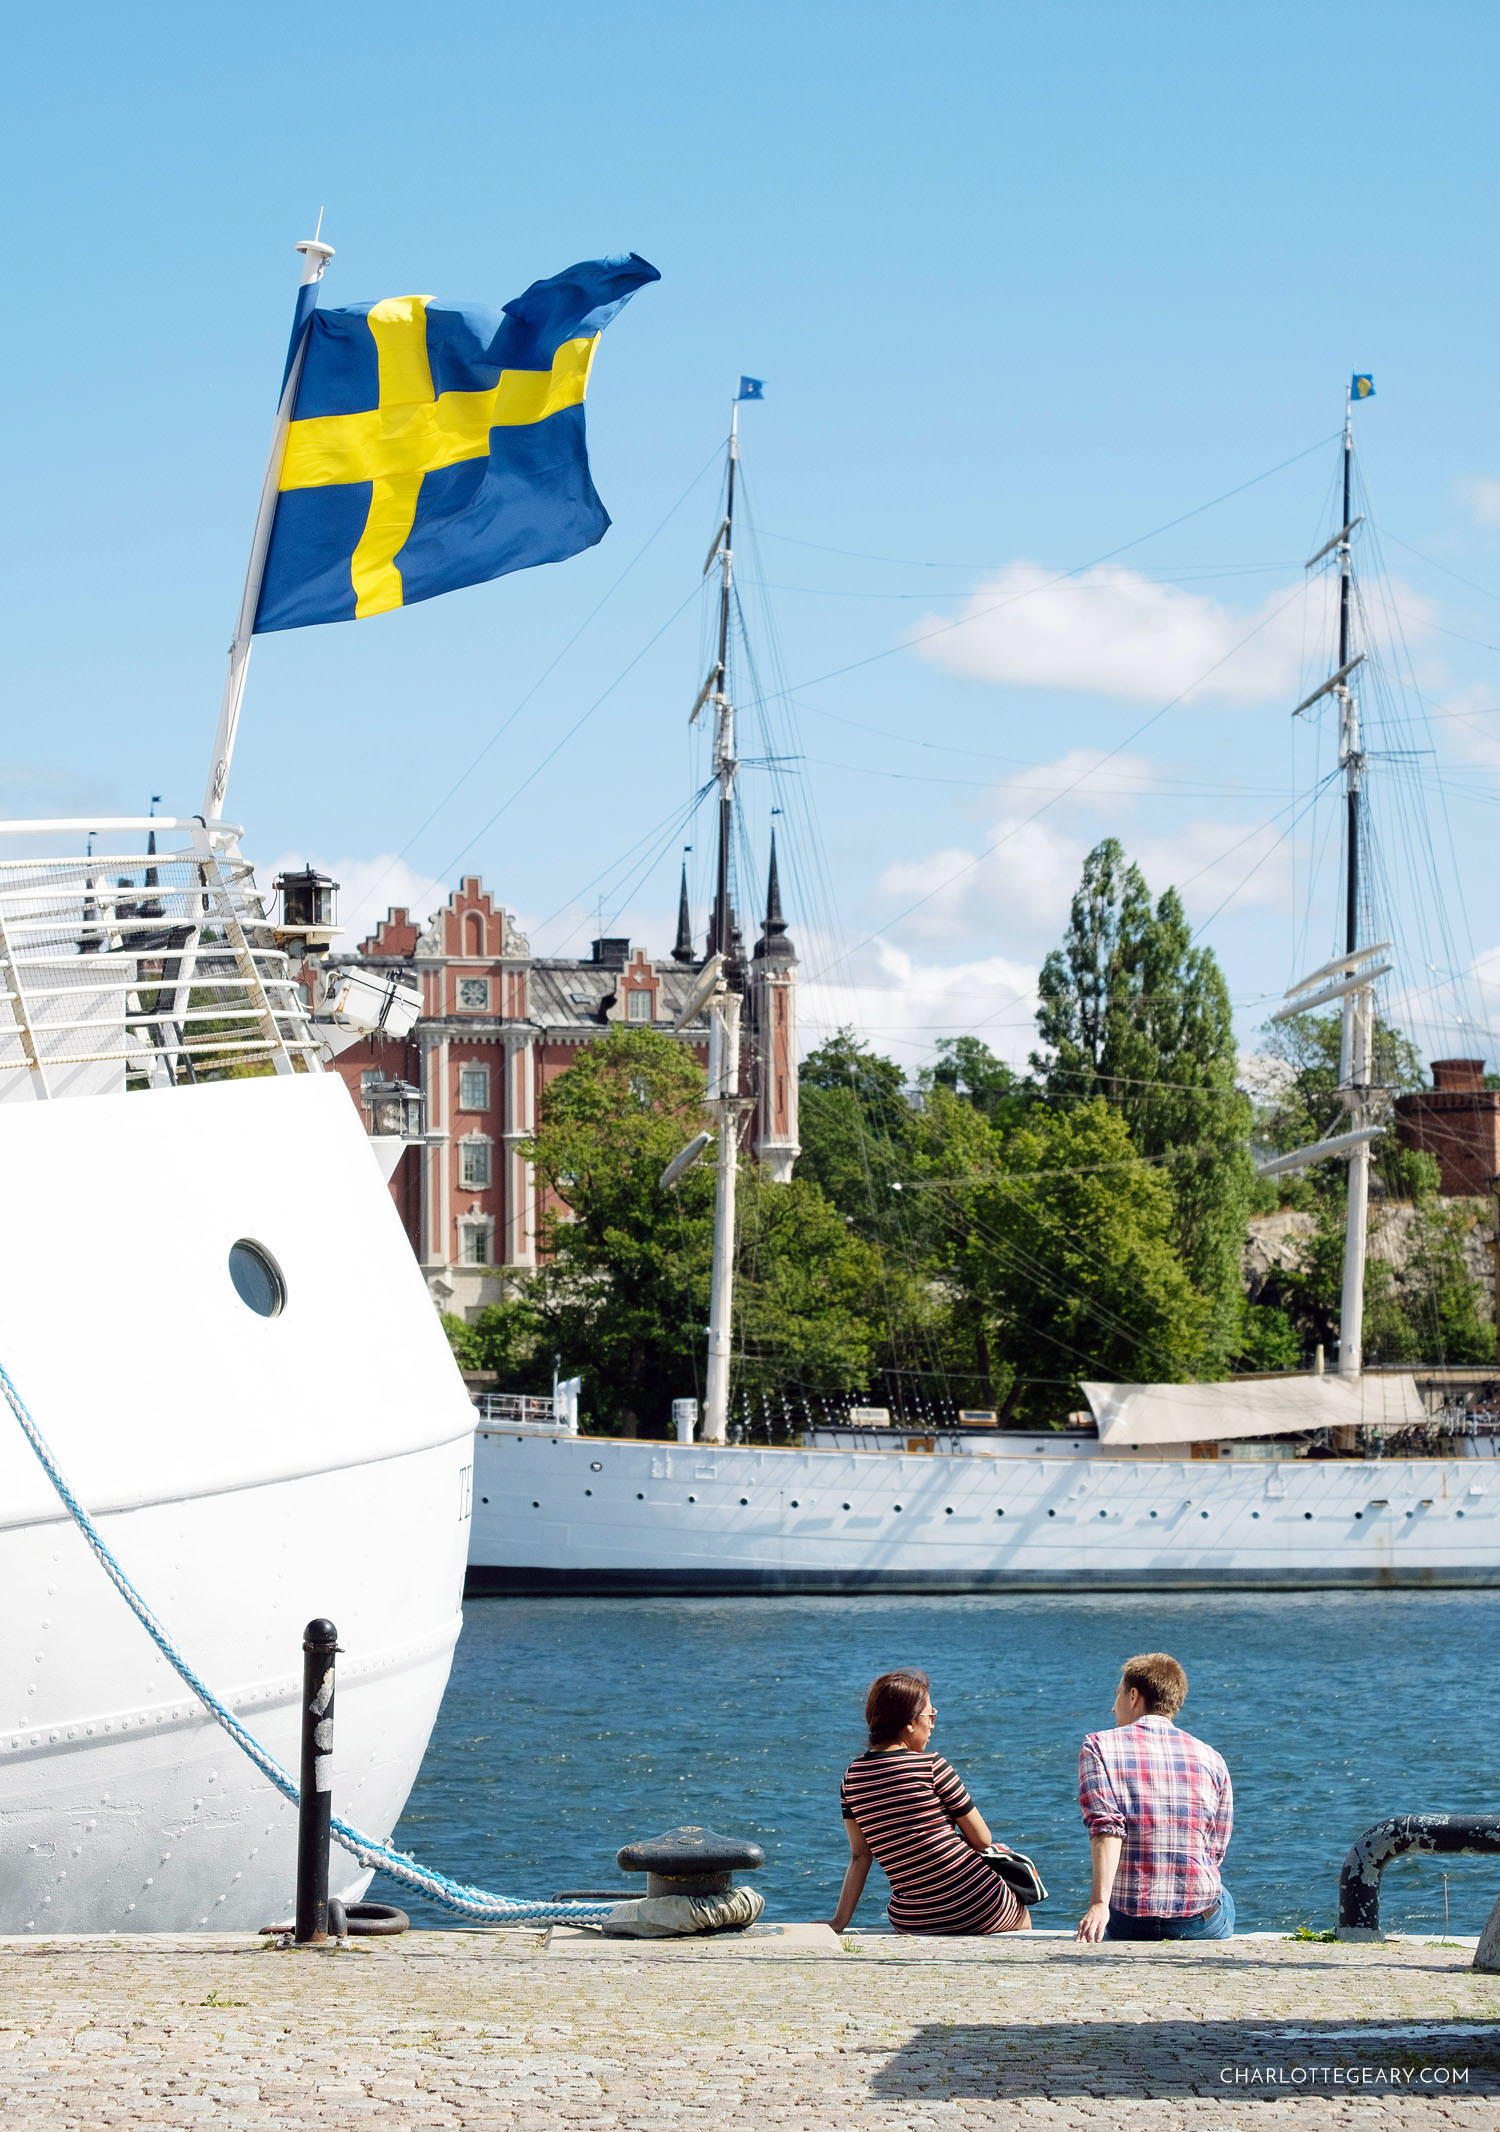 Stockholm waterfront